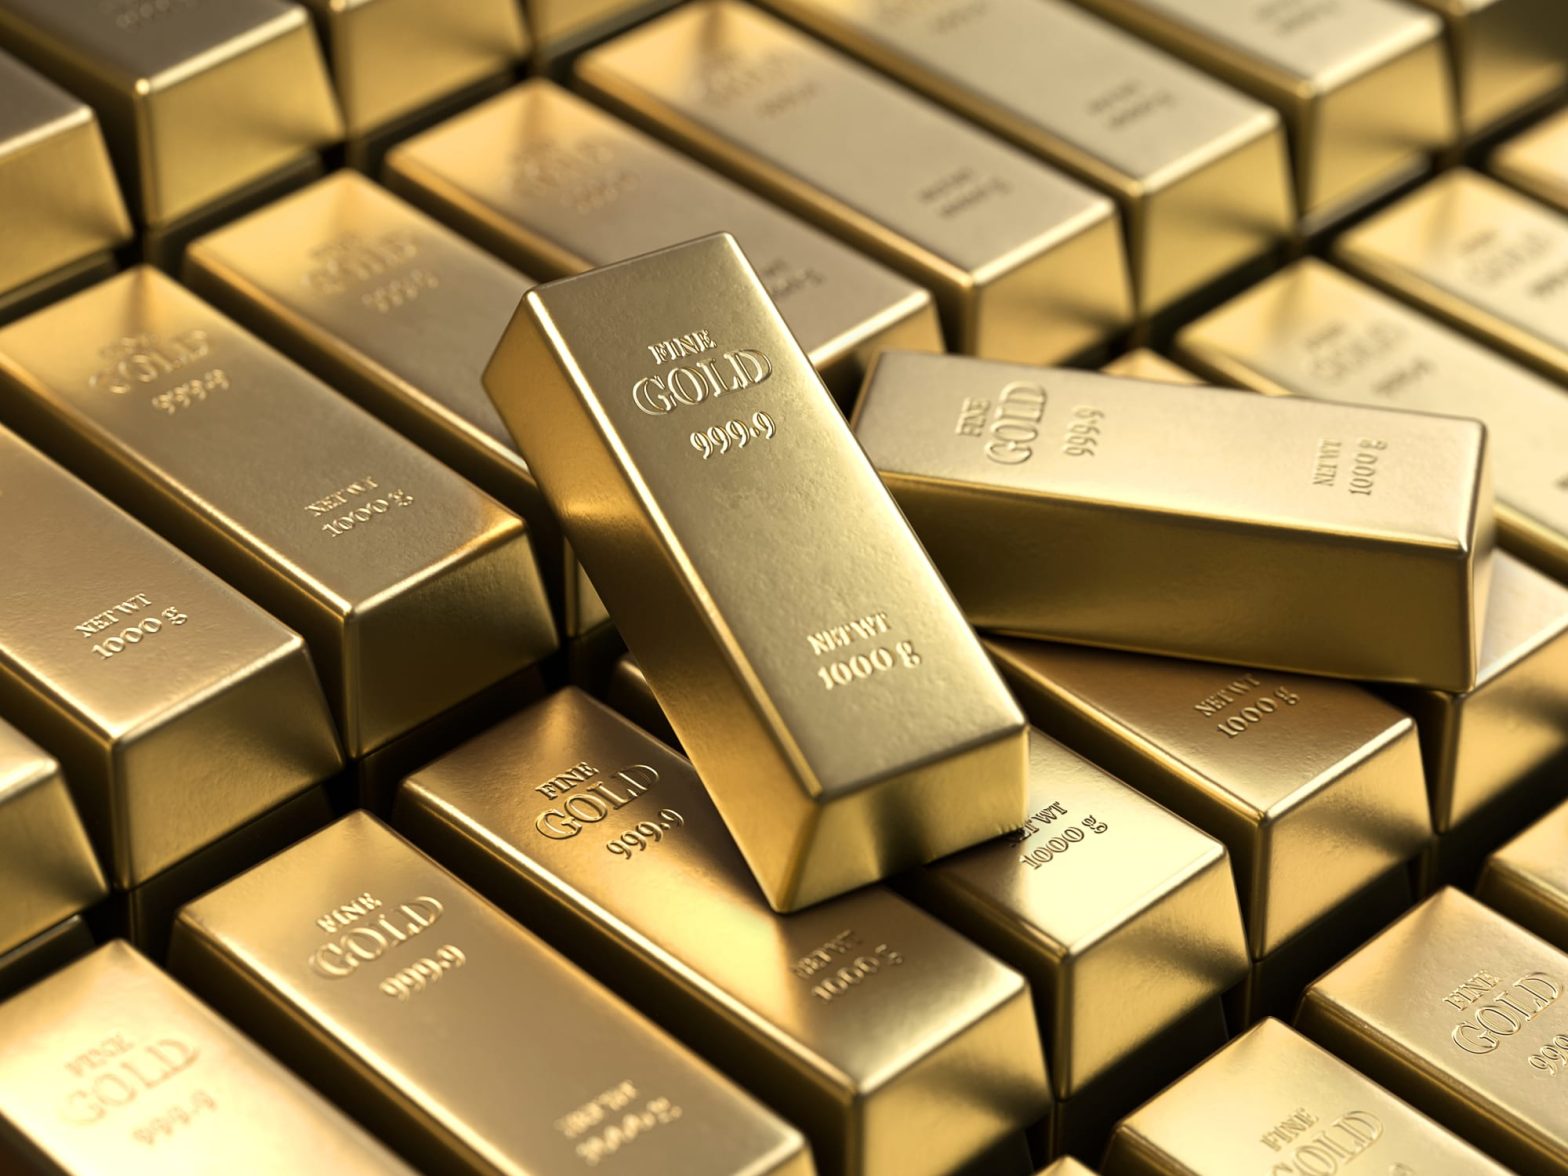 IRA Gold investment